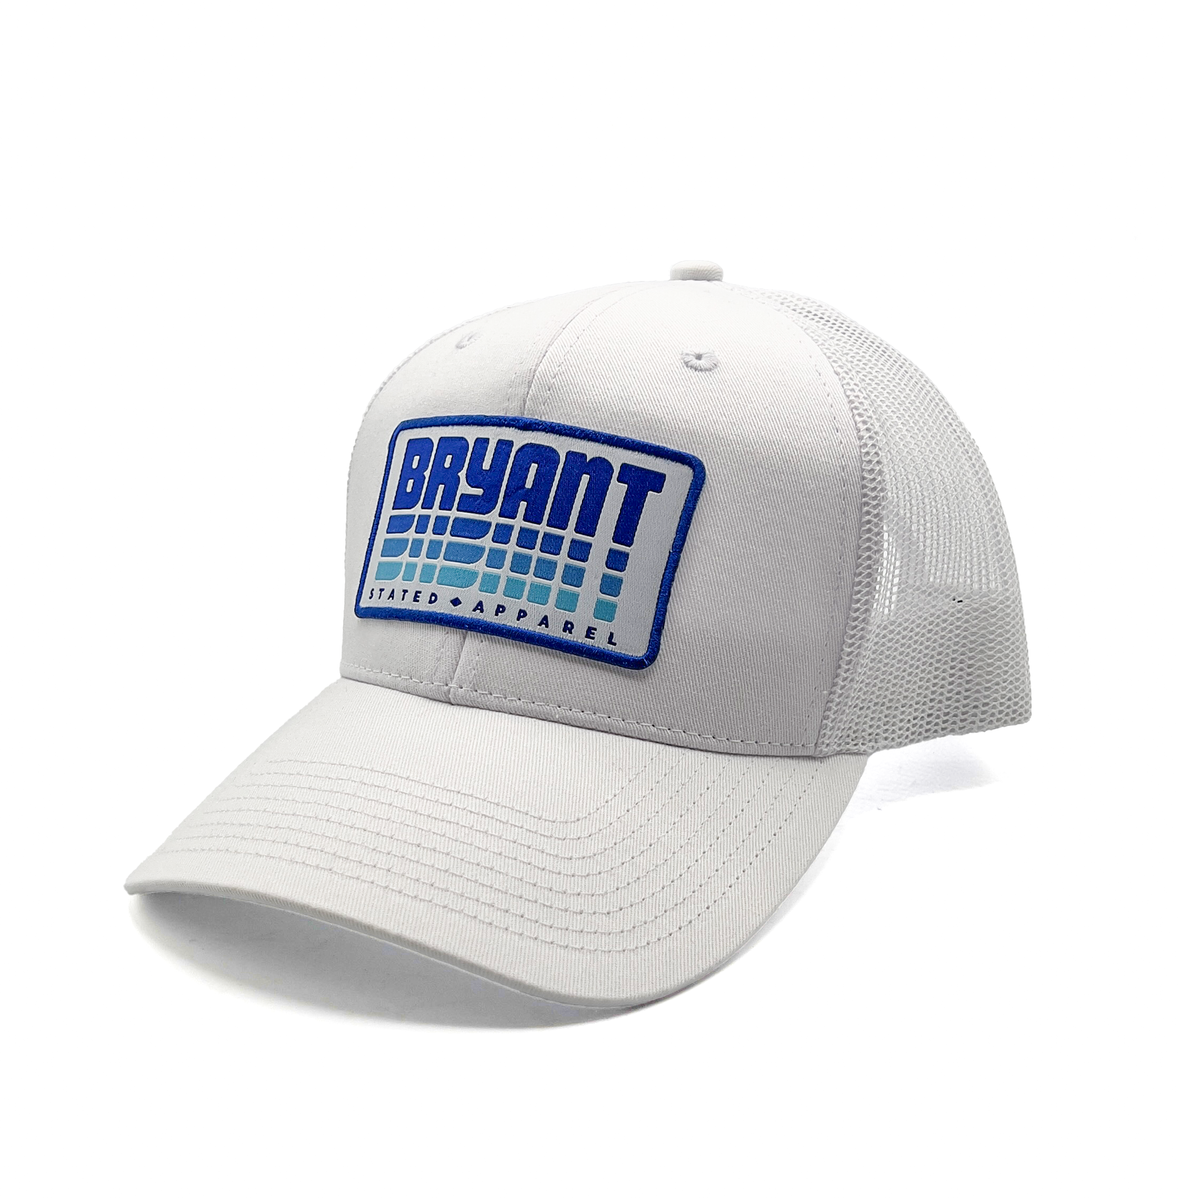 Bryant Retro Stretch Patch Hat